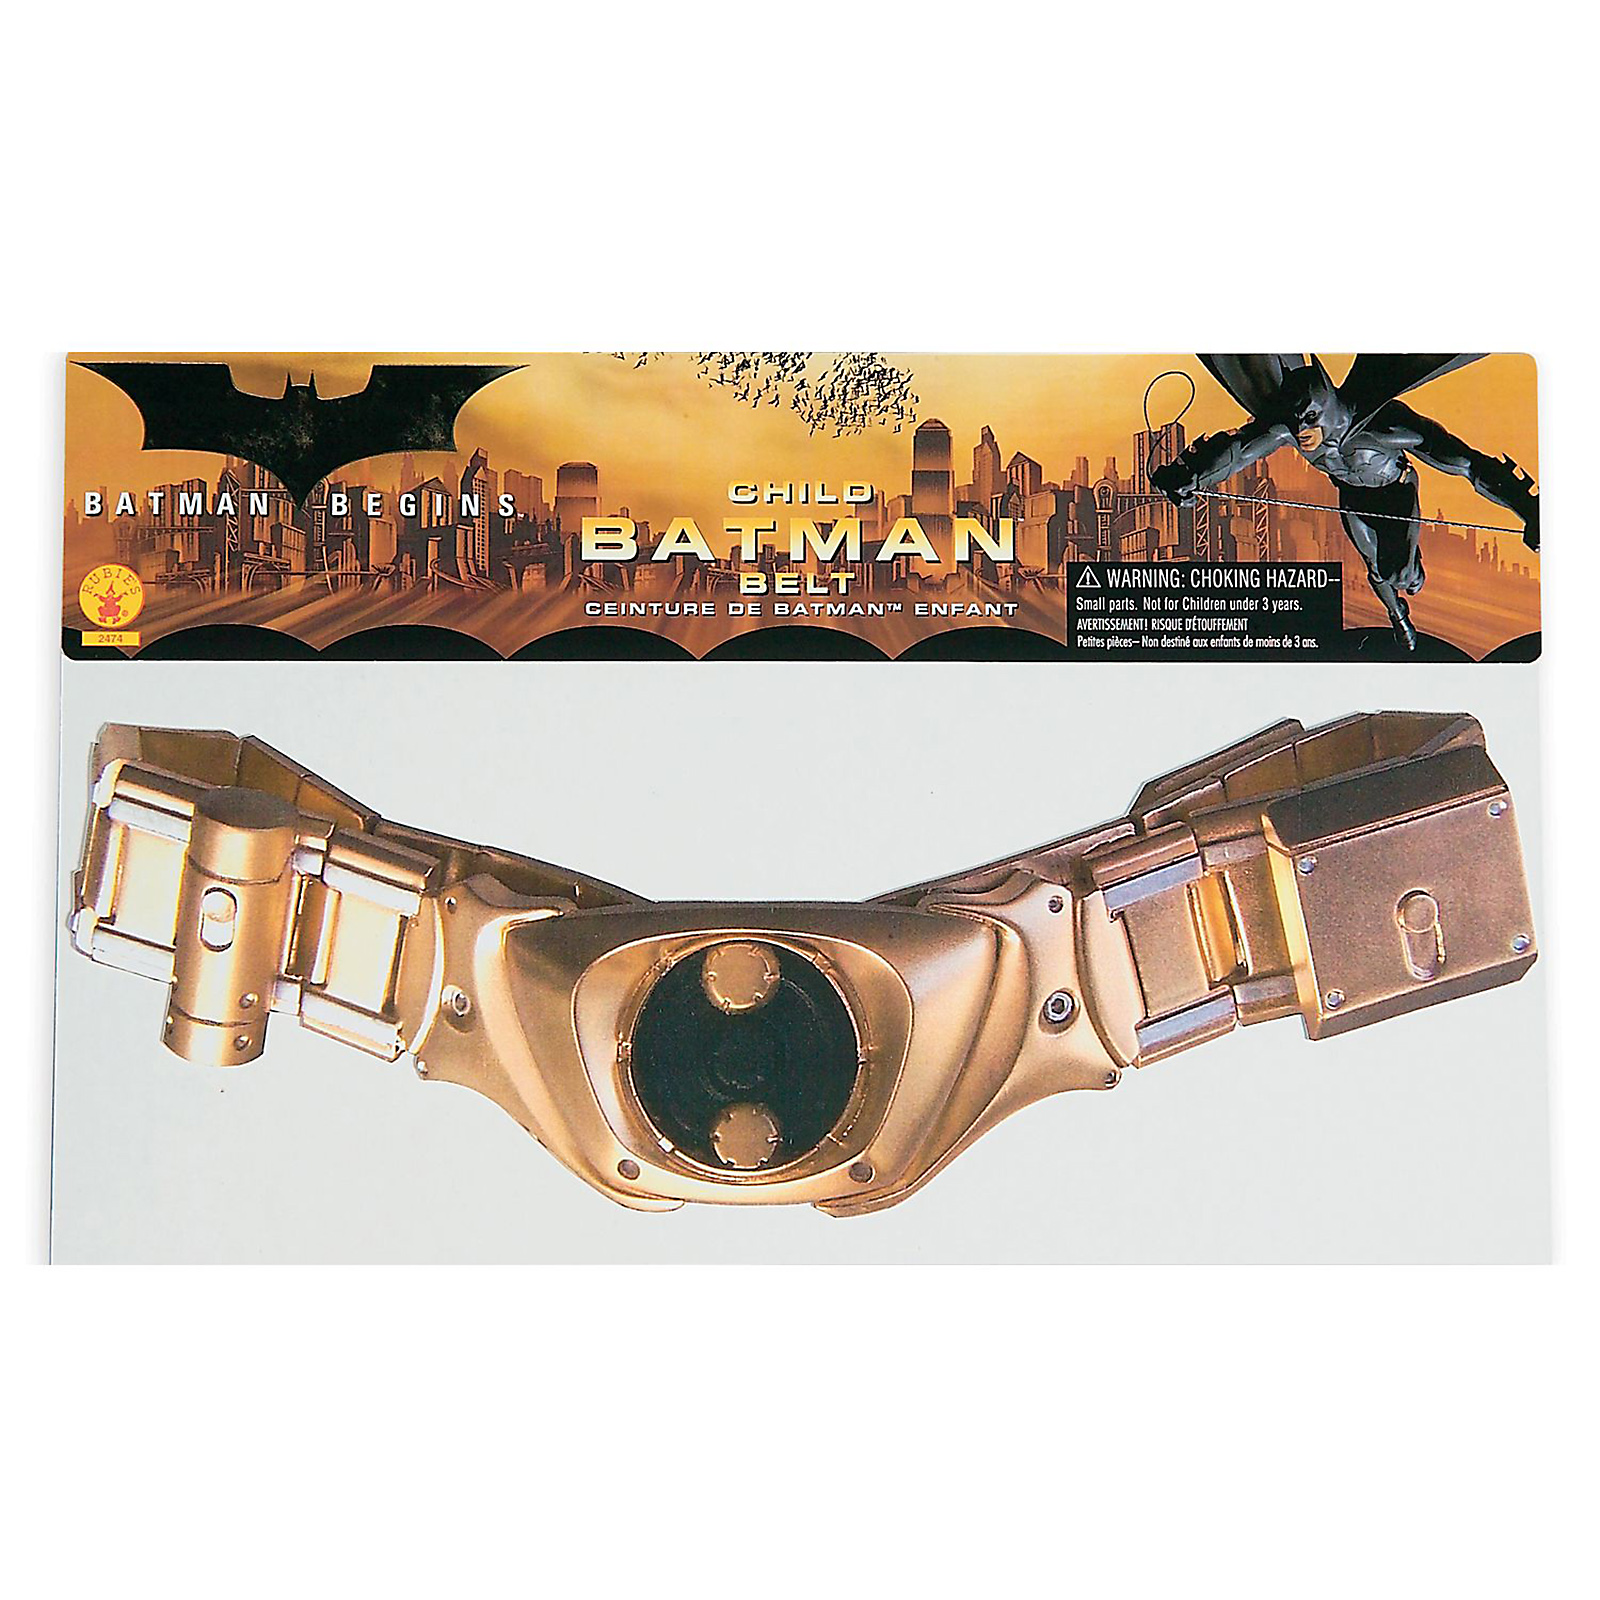 Child Batman Belt Costume Accessory